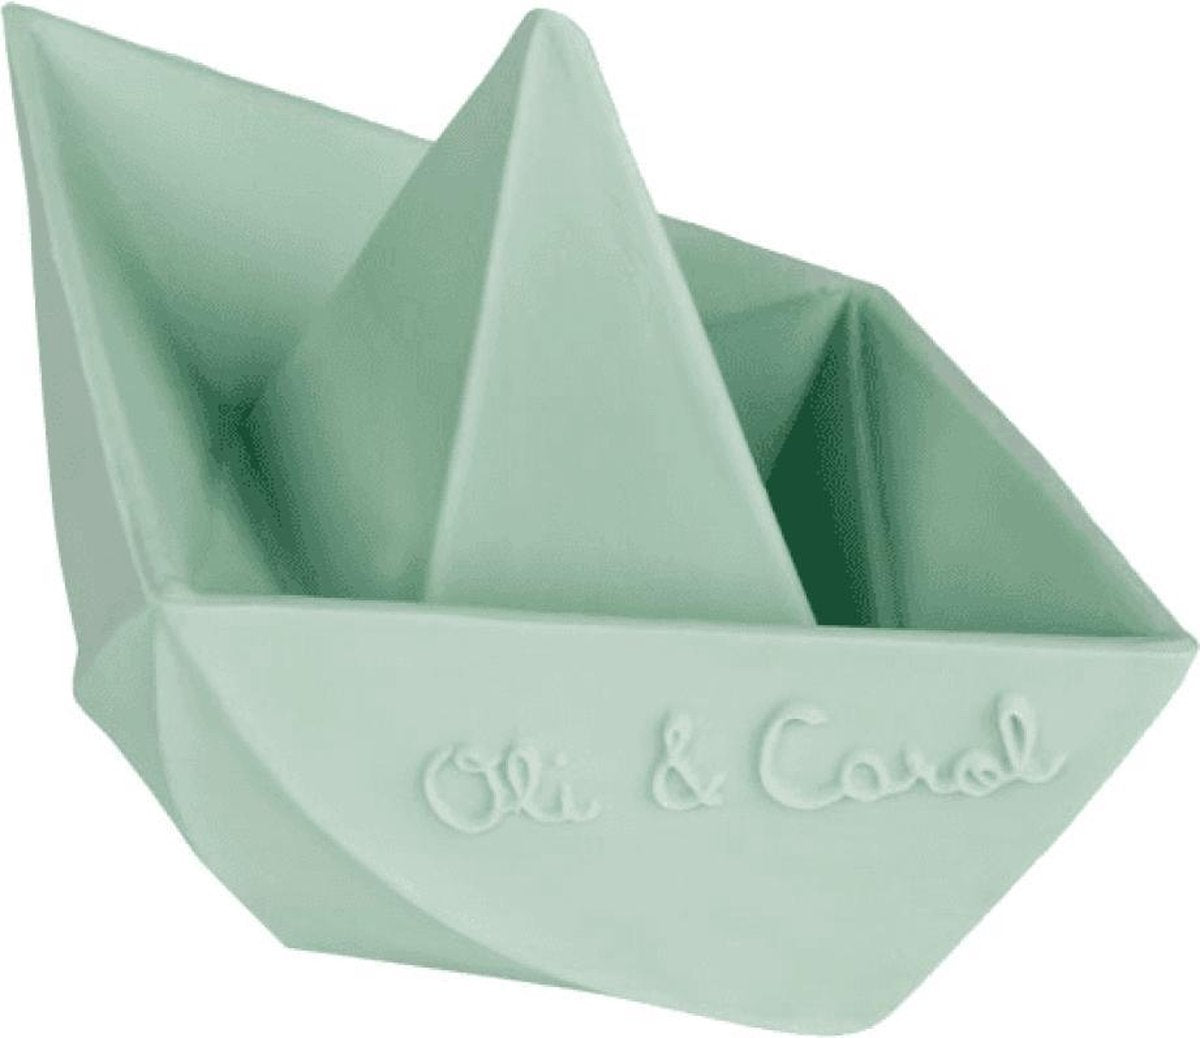 Oli & Carol badspeeltje- bijtspeeltje- natuurlijk- bootje - mint